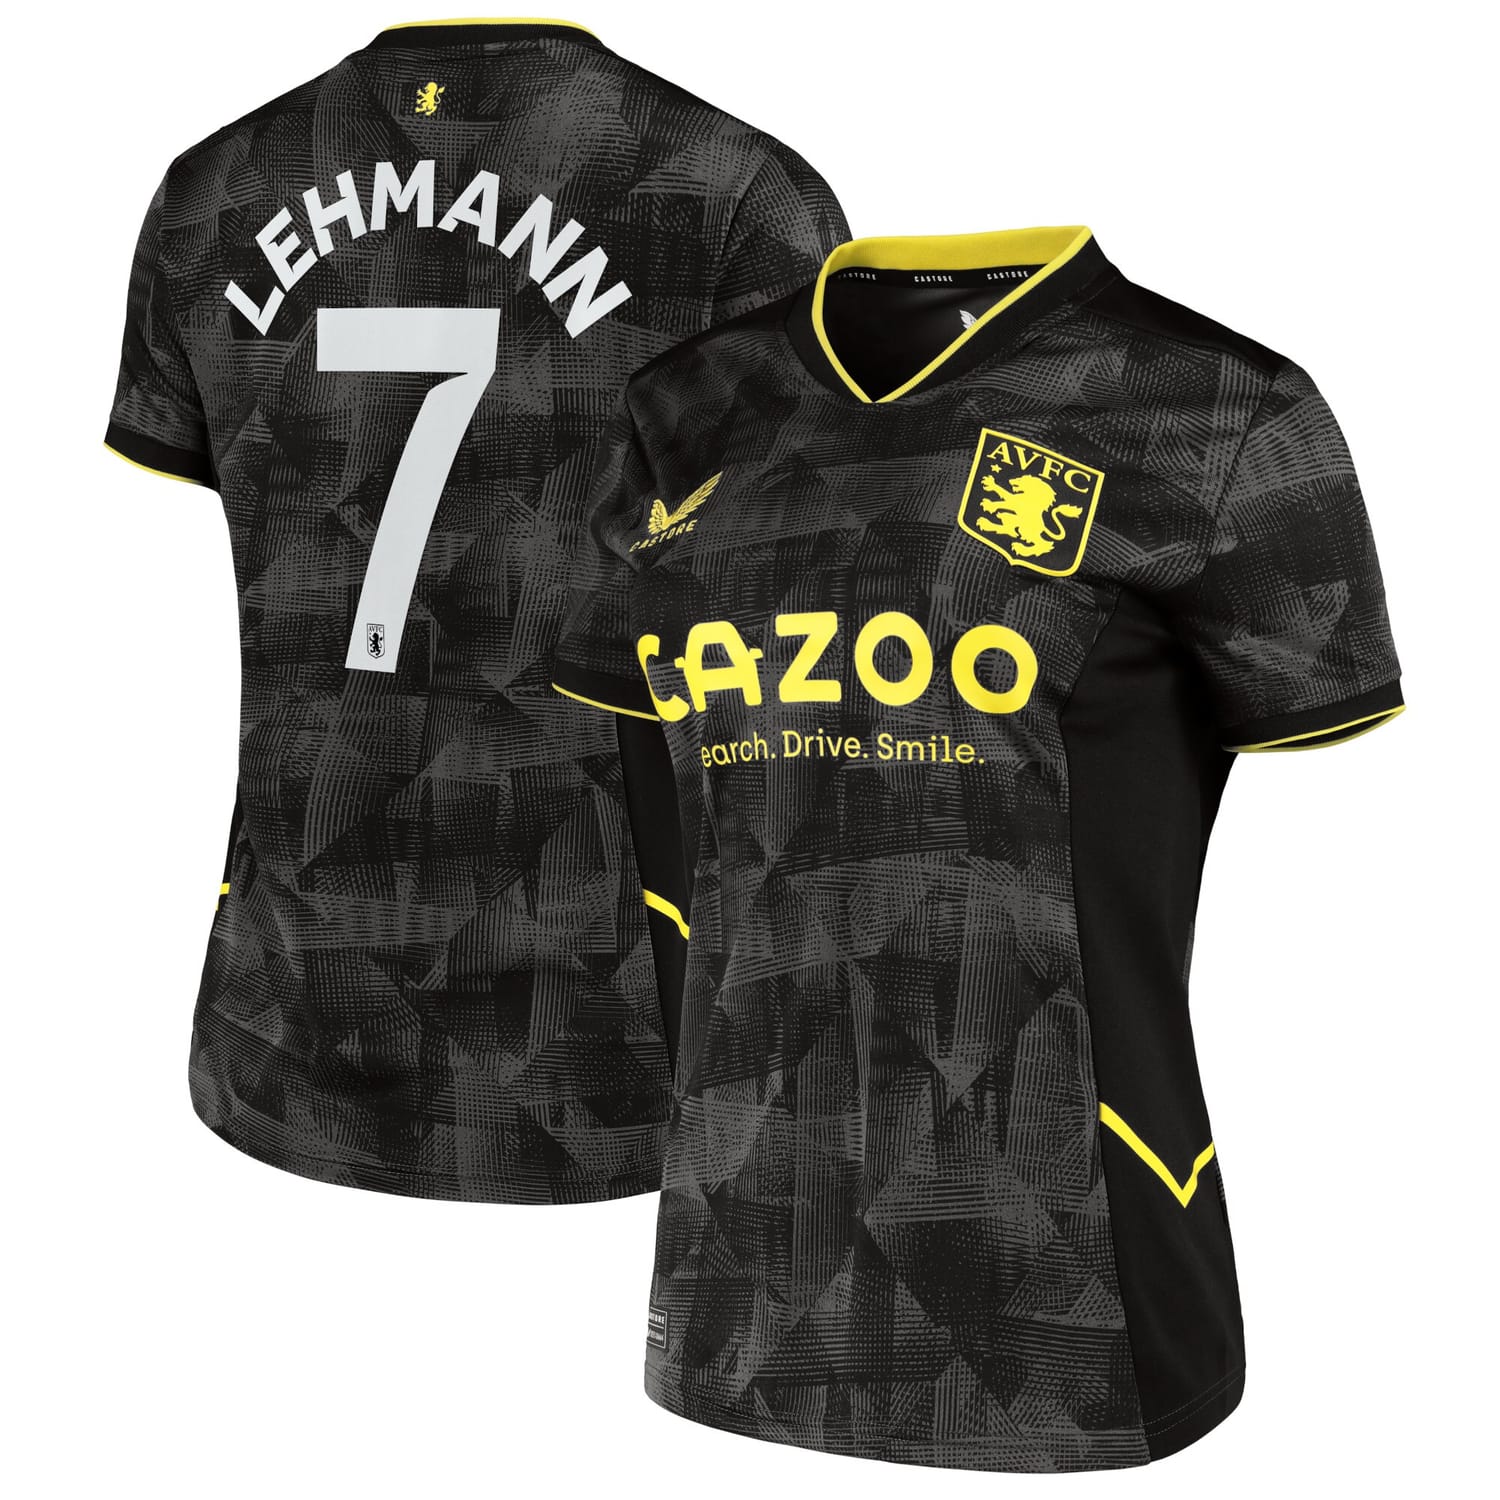 Premier League Aston Villa Third Cup Jersey Shirt 2022-23 player Alisha Lehmann 7 printing for Women